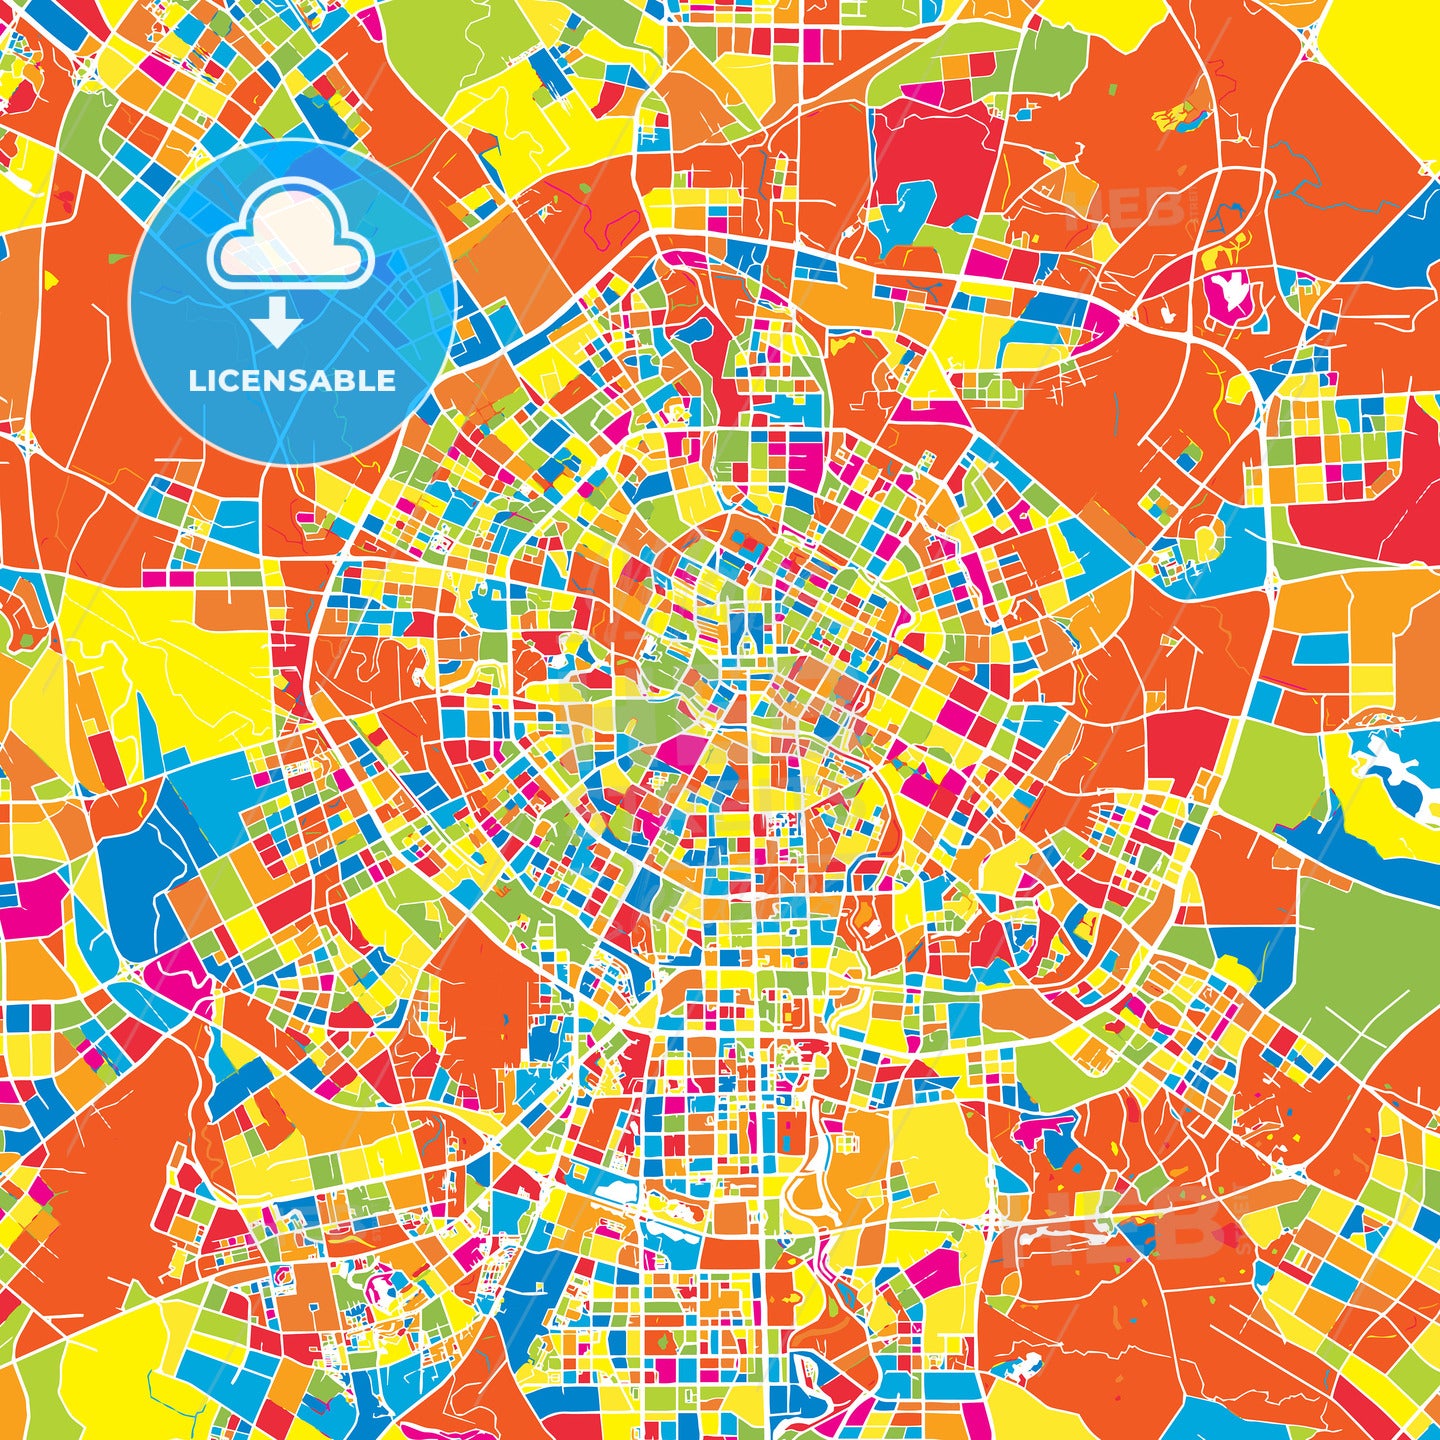 Chengdu, China, colorful vector map